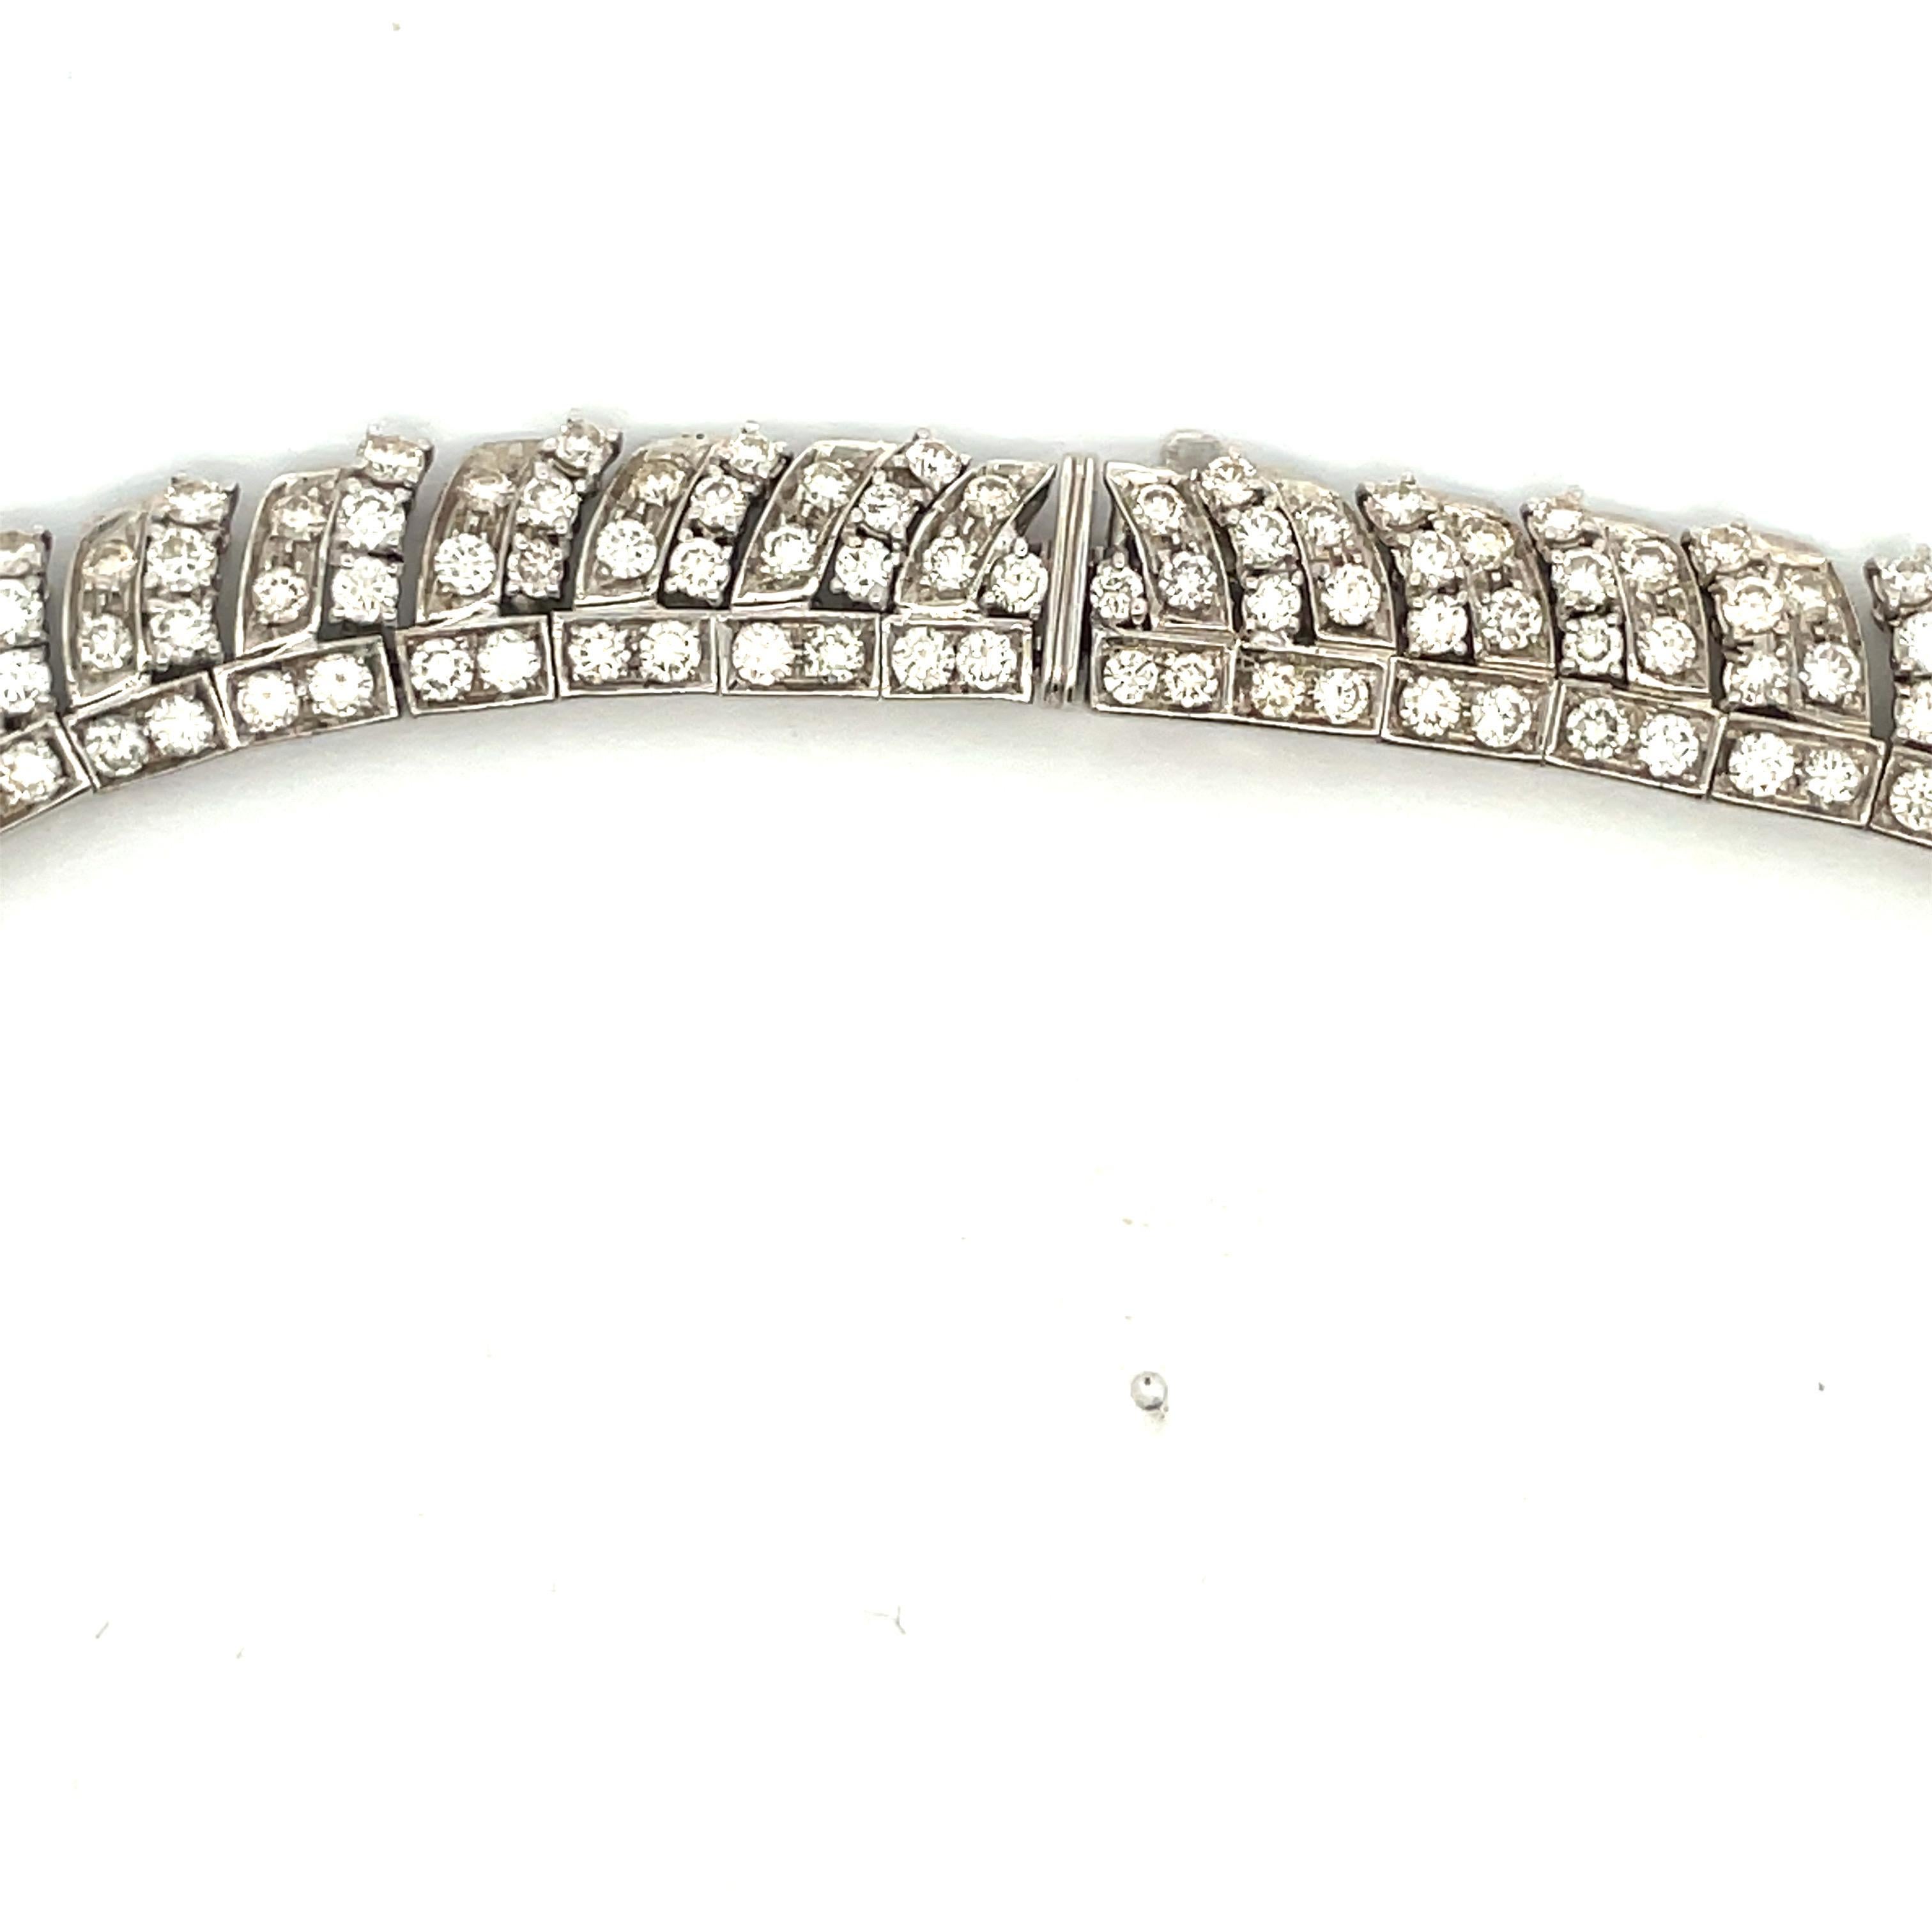 Round Cut Vintage Diamond Collar Bib Necklace 66 Carats 18 Karat White Gold 113.5 Grams For Sale